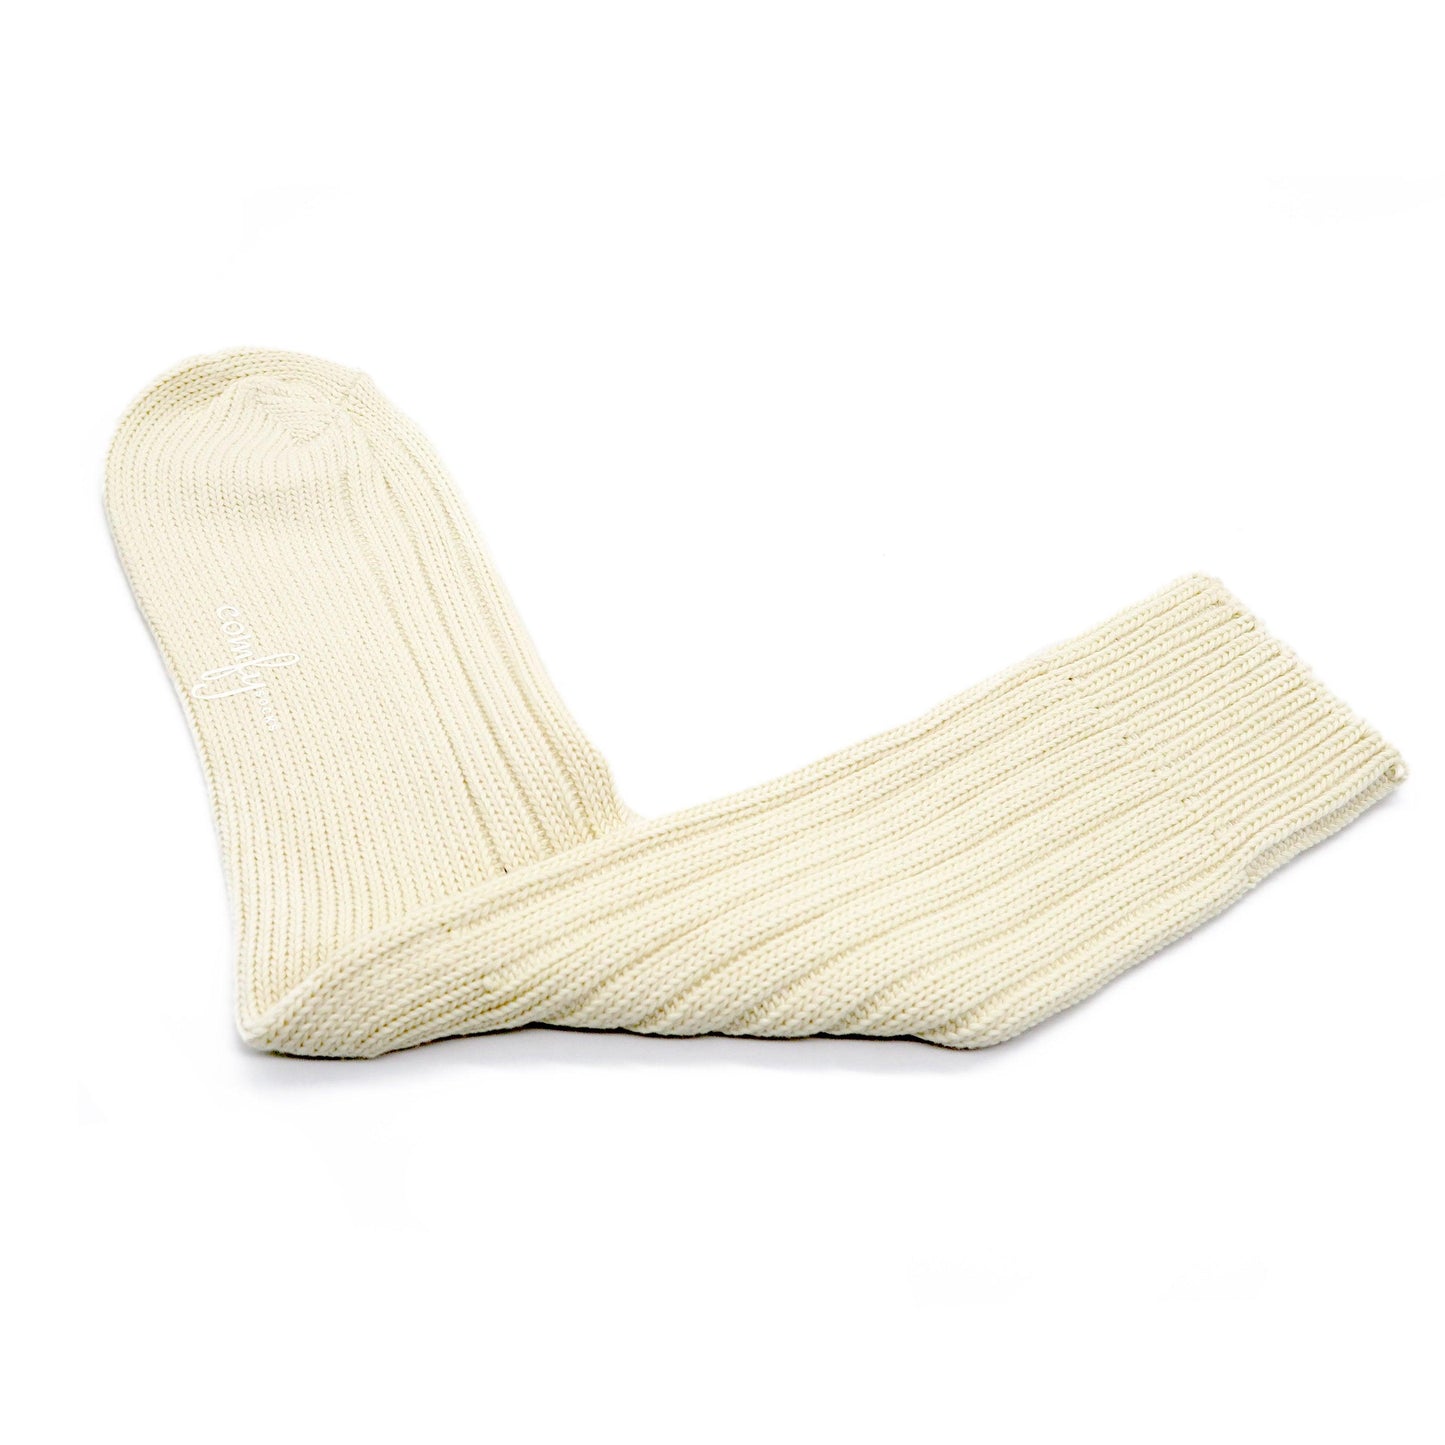 Alfred knitted socks beige color